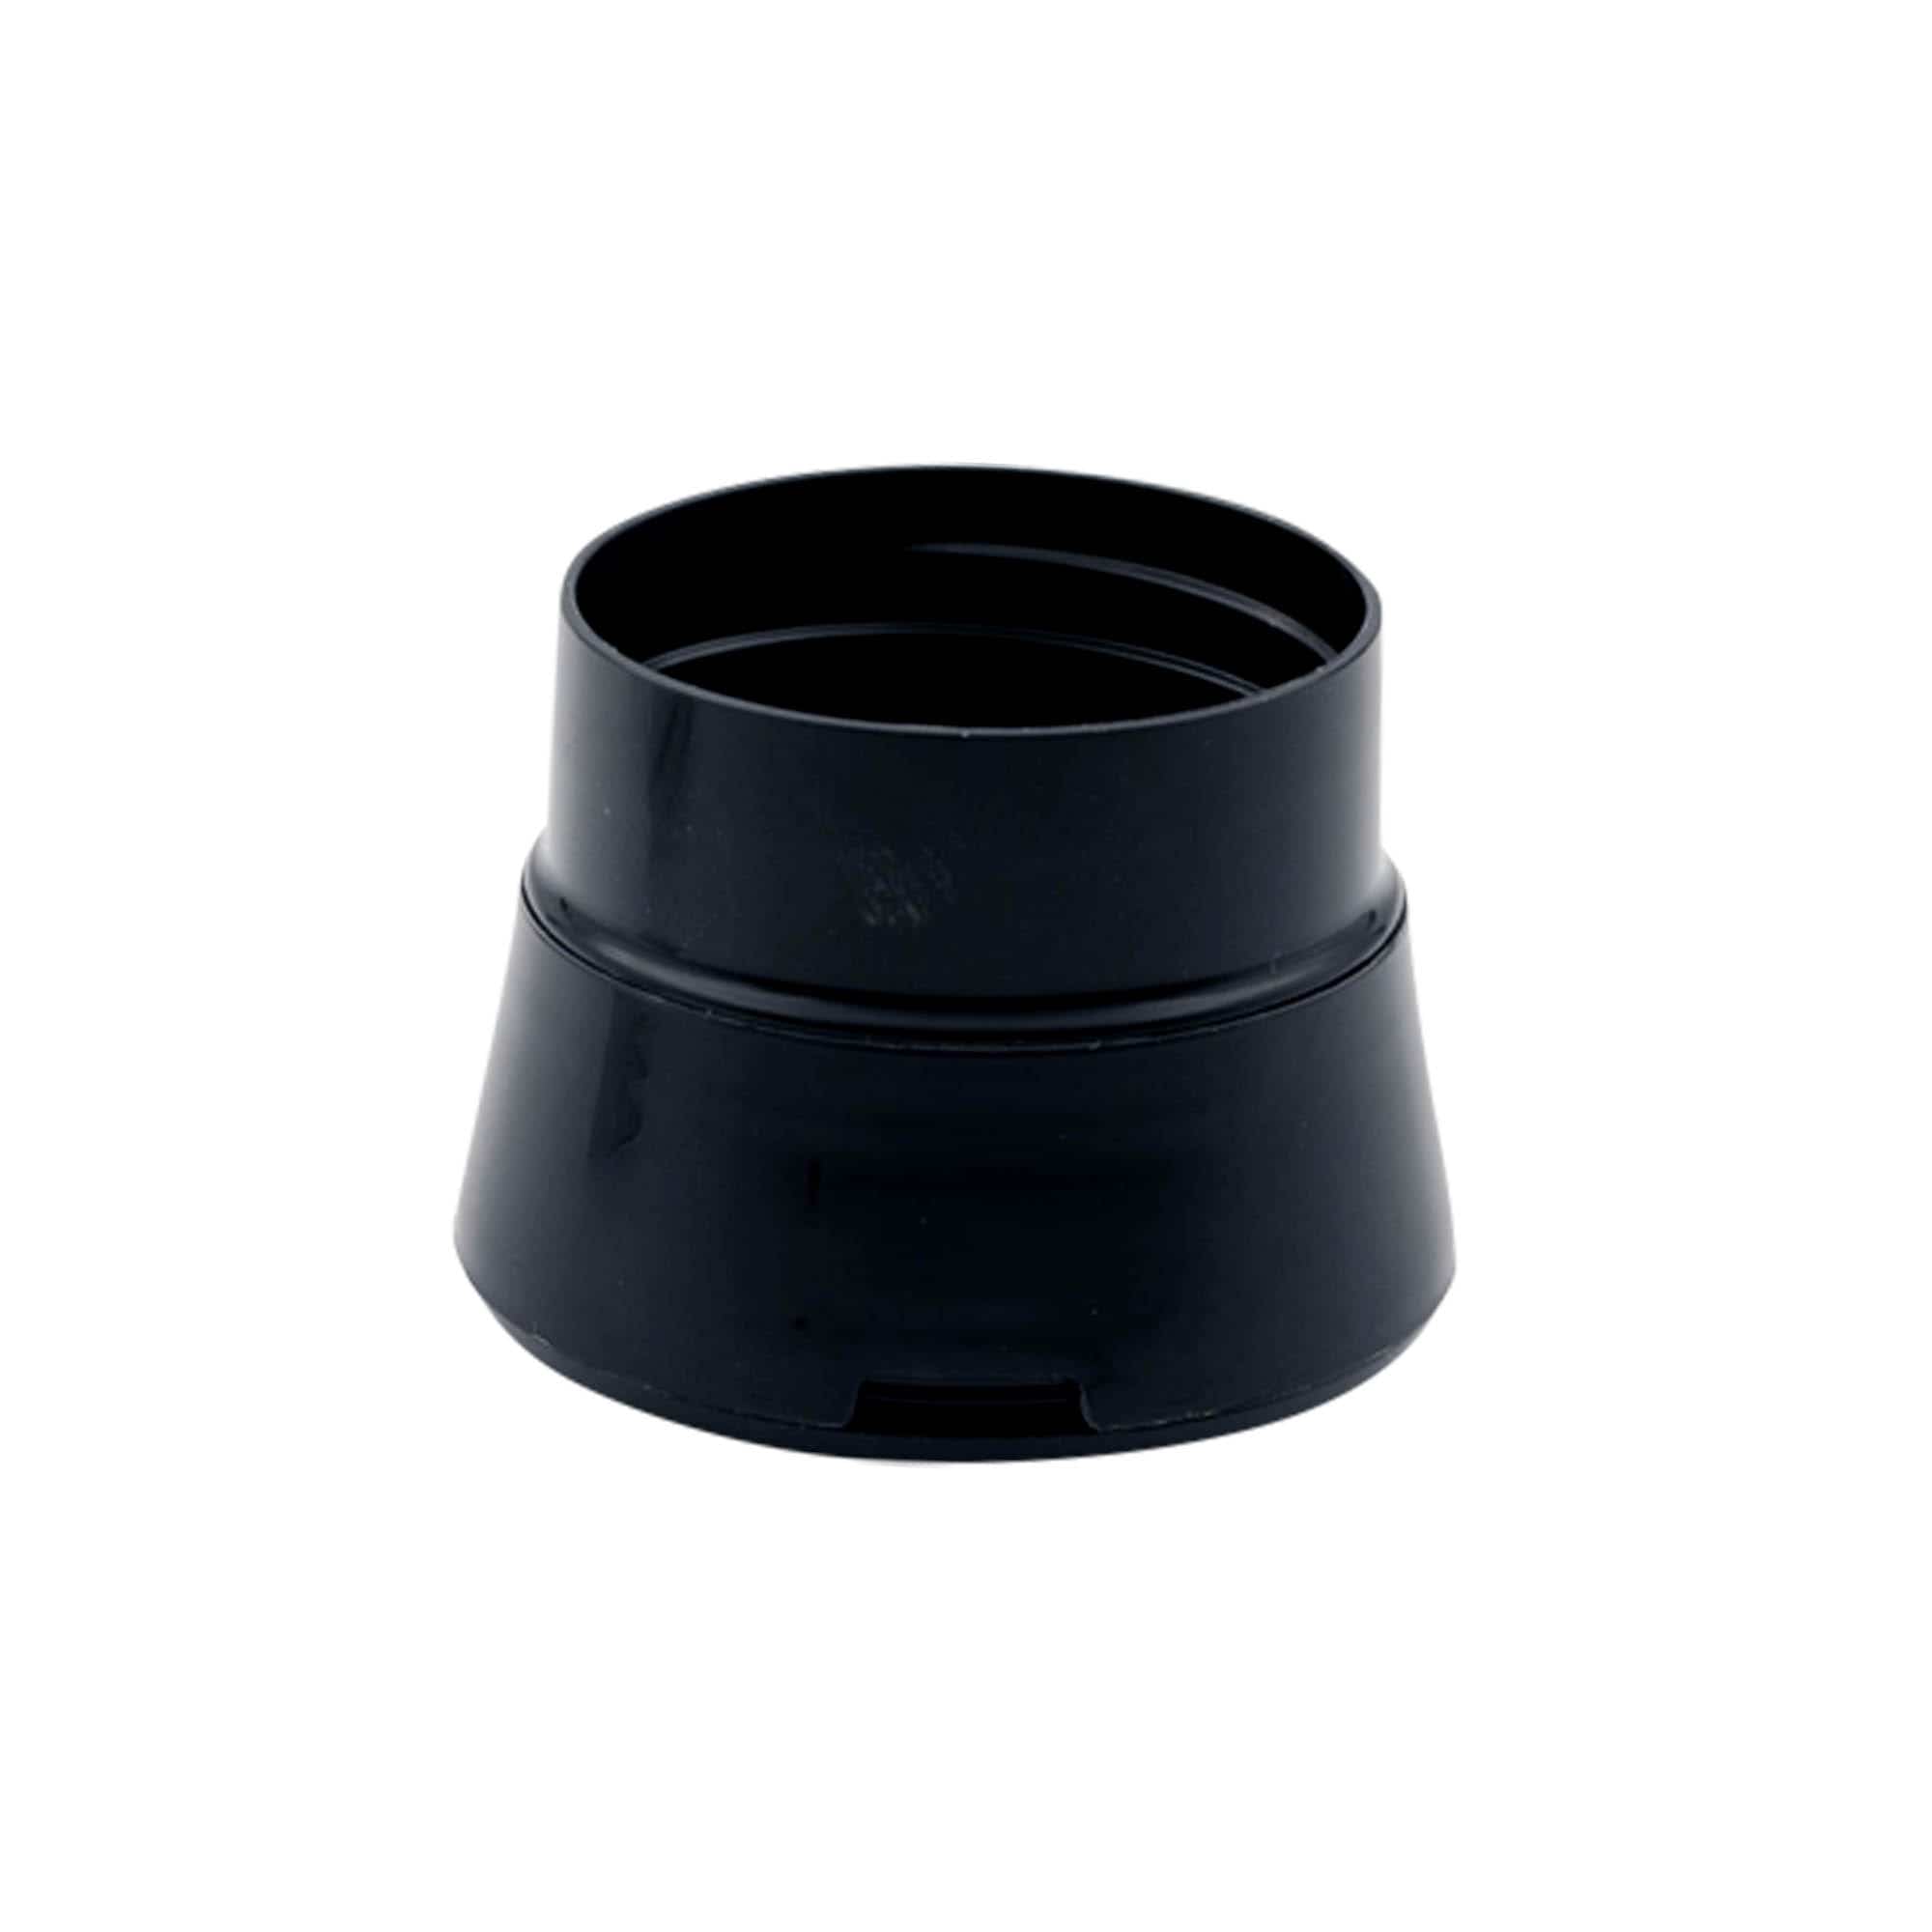 Mill cap for spice jar, PP plastic, black, for opening: GPI 38/400